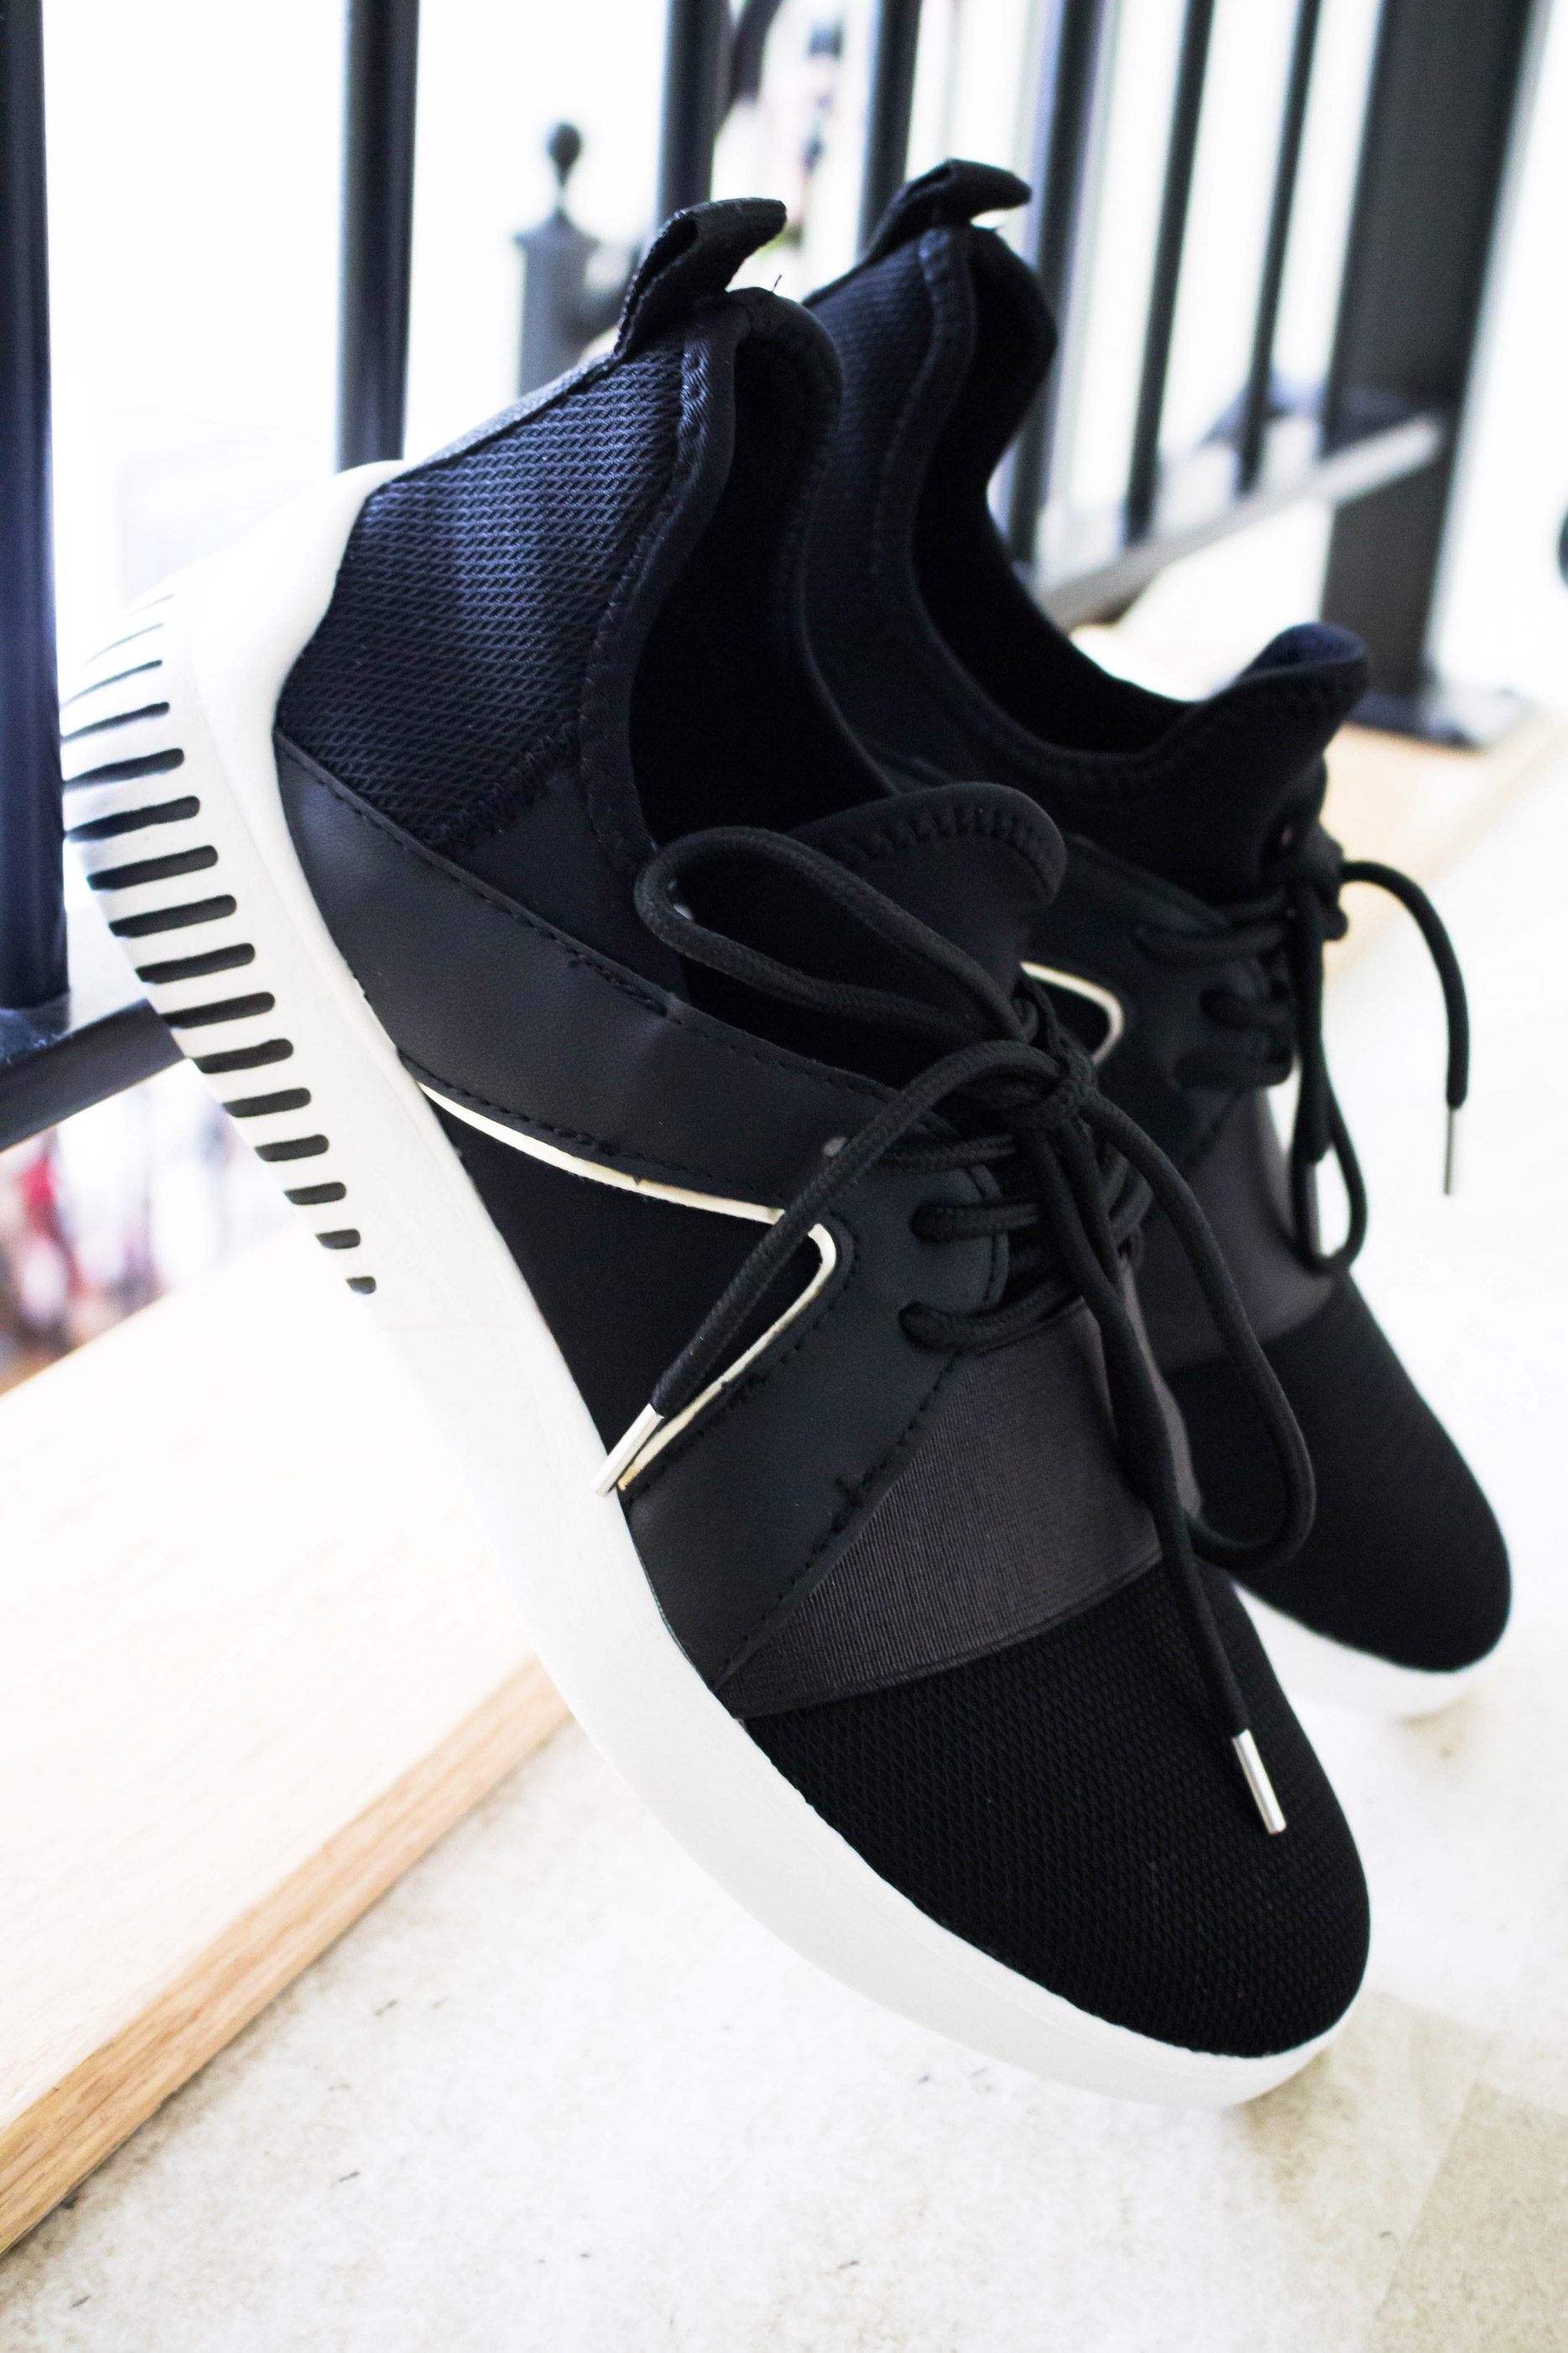 Designer for Less: Black Sneakers by DV for Target